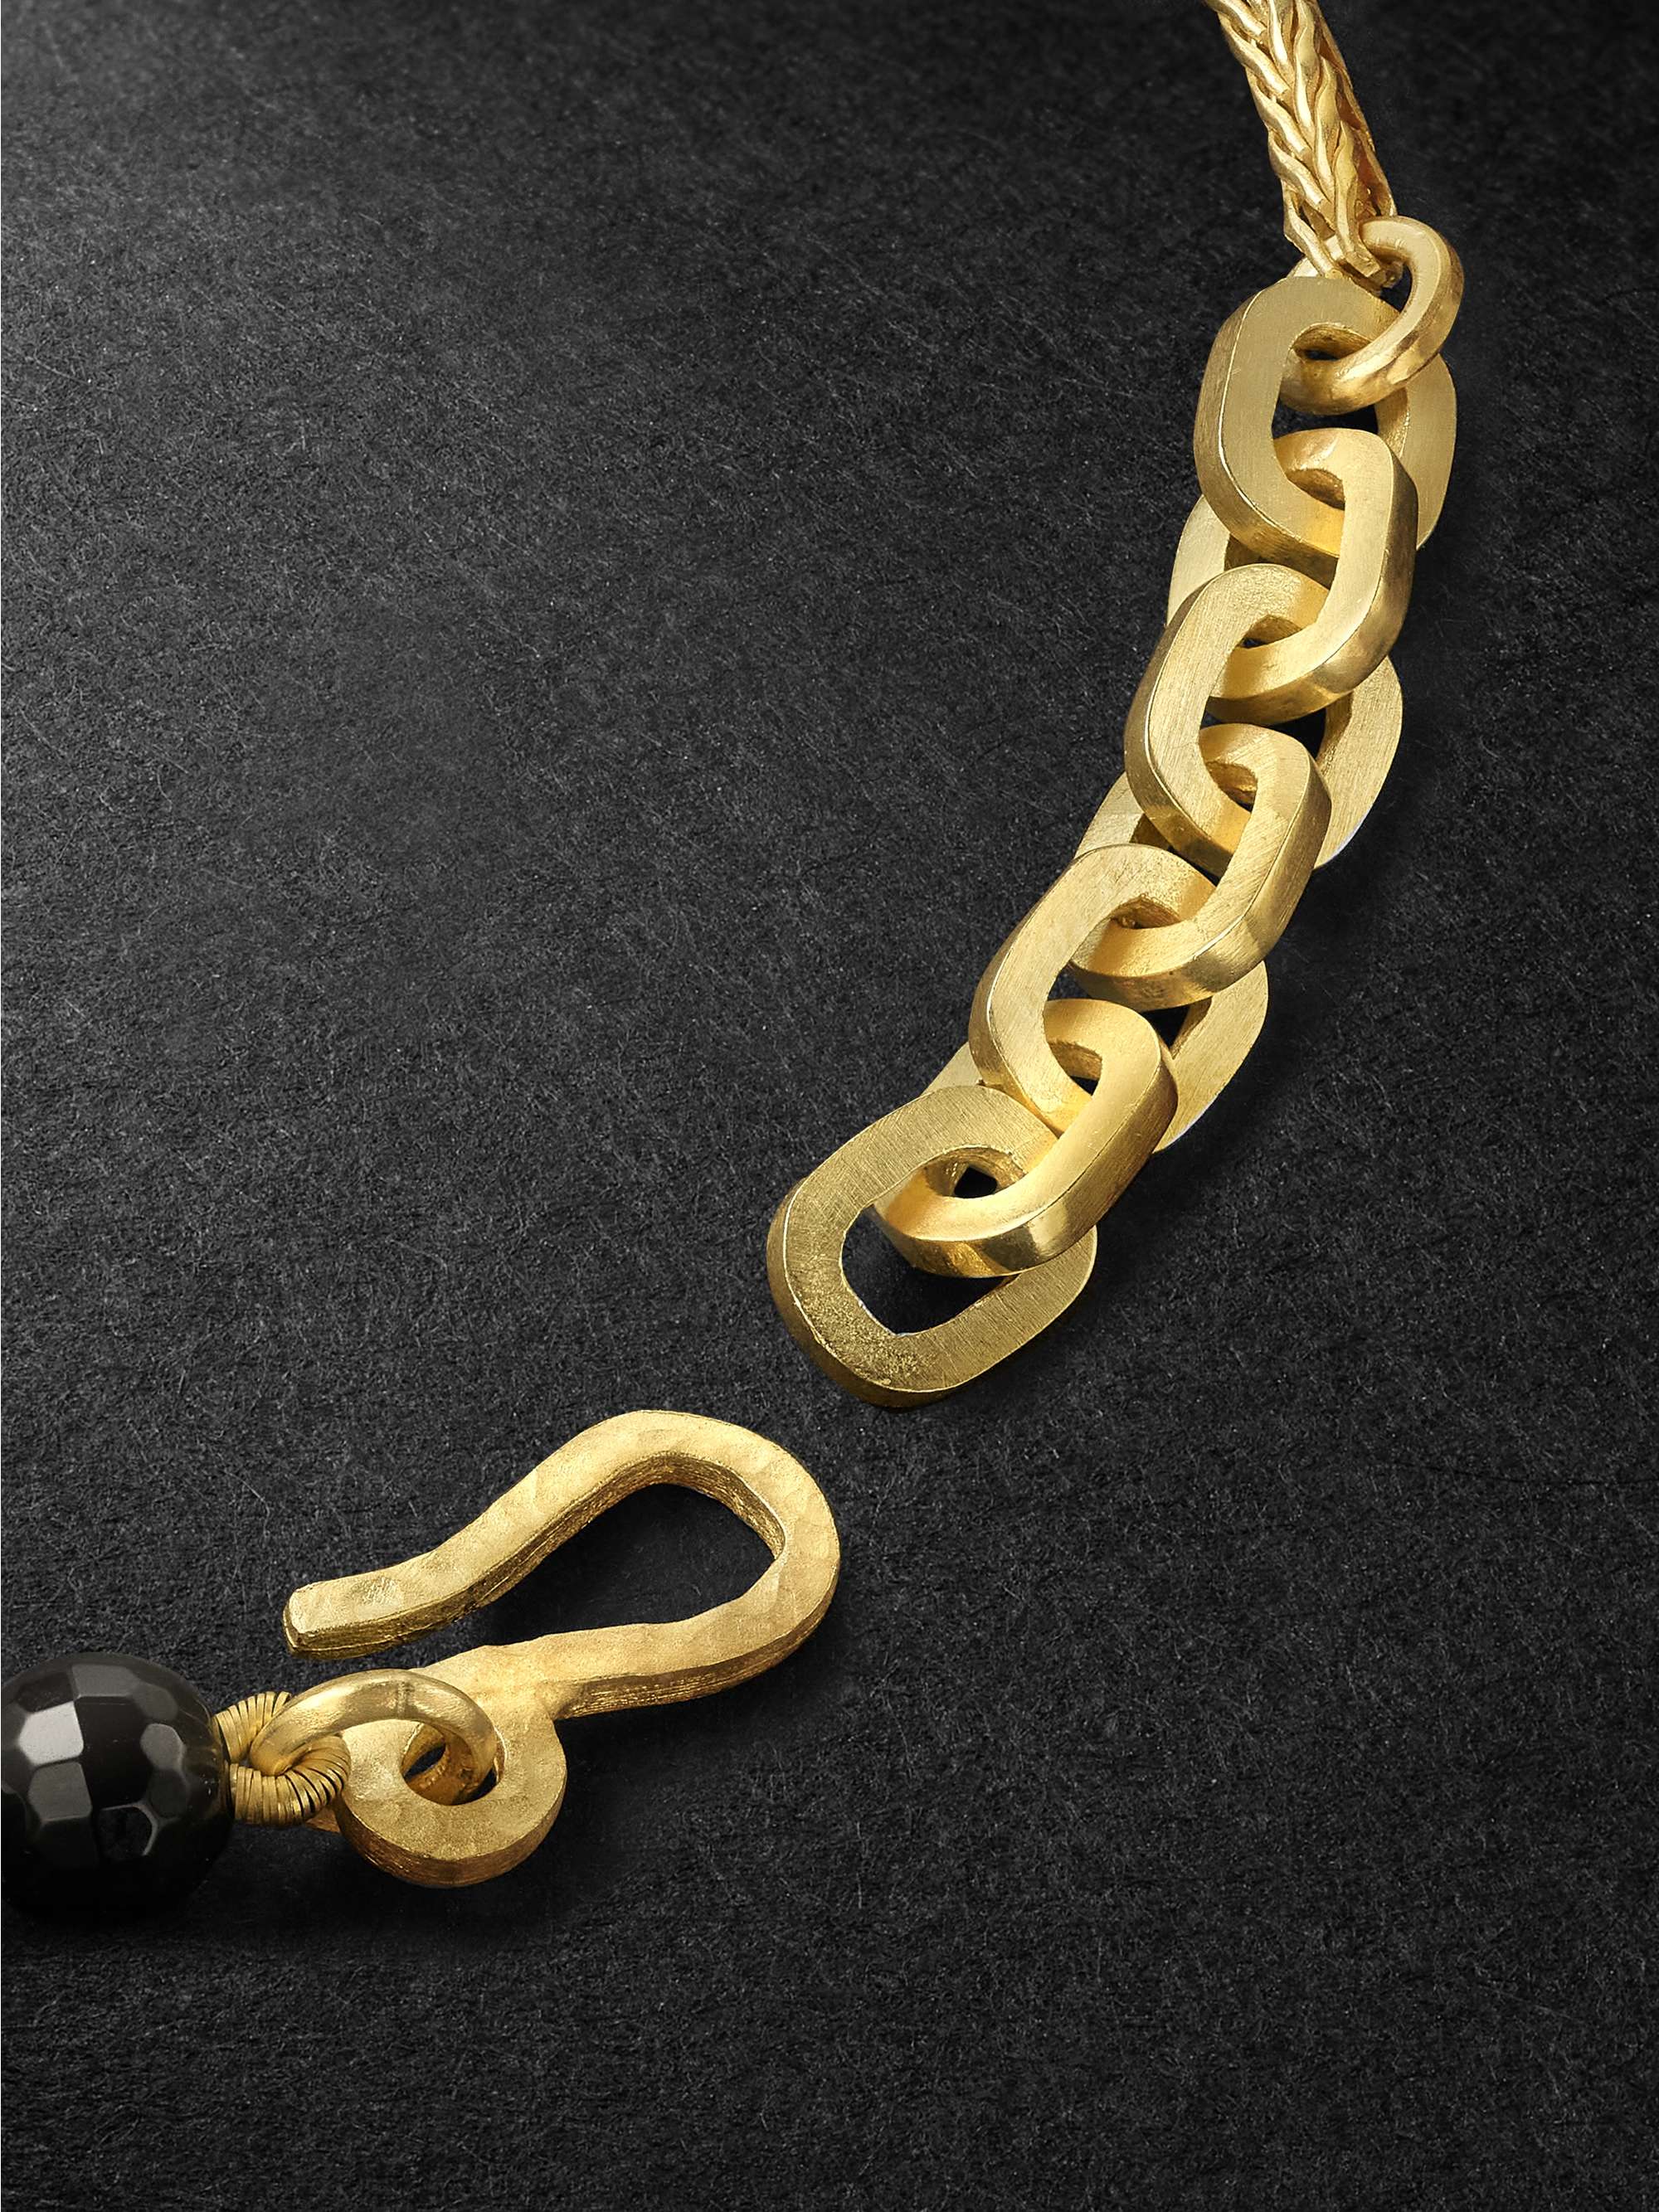 ELHANATI Isha Chain Gold, Spinel and Coral Bracelet